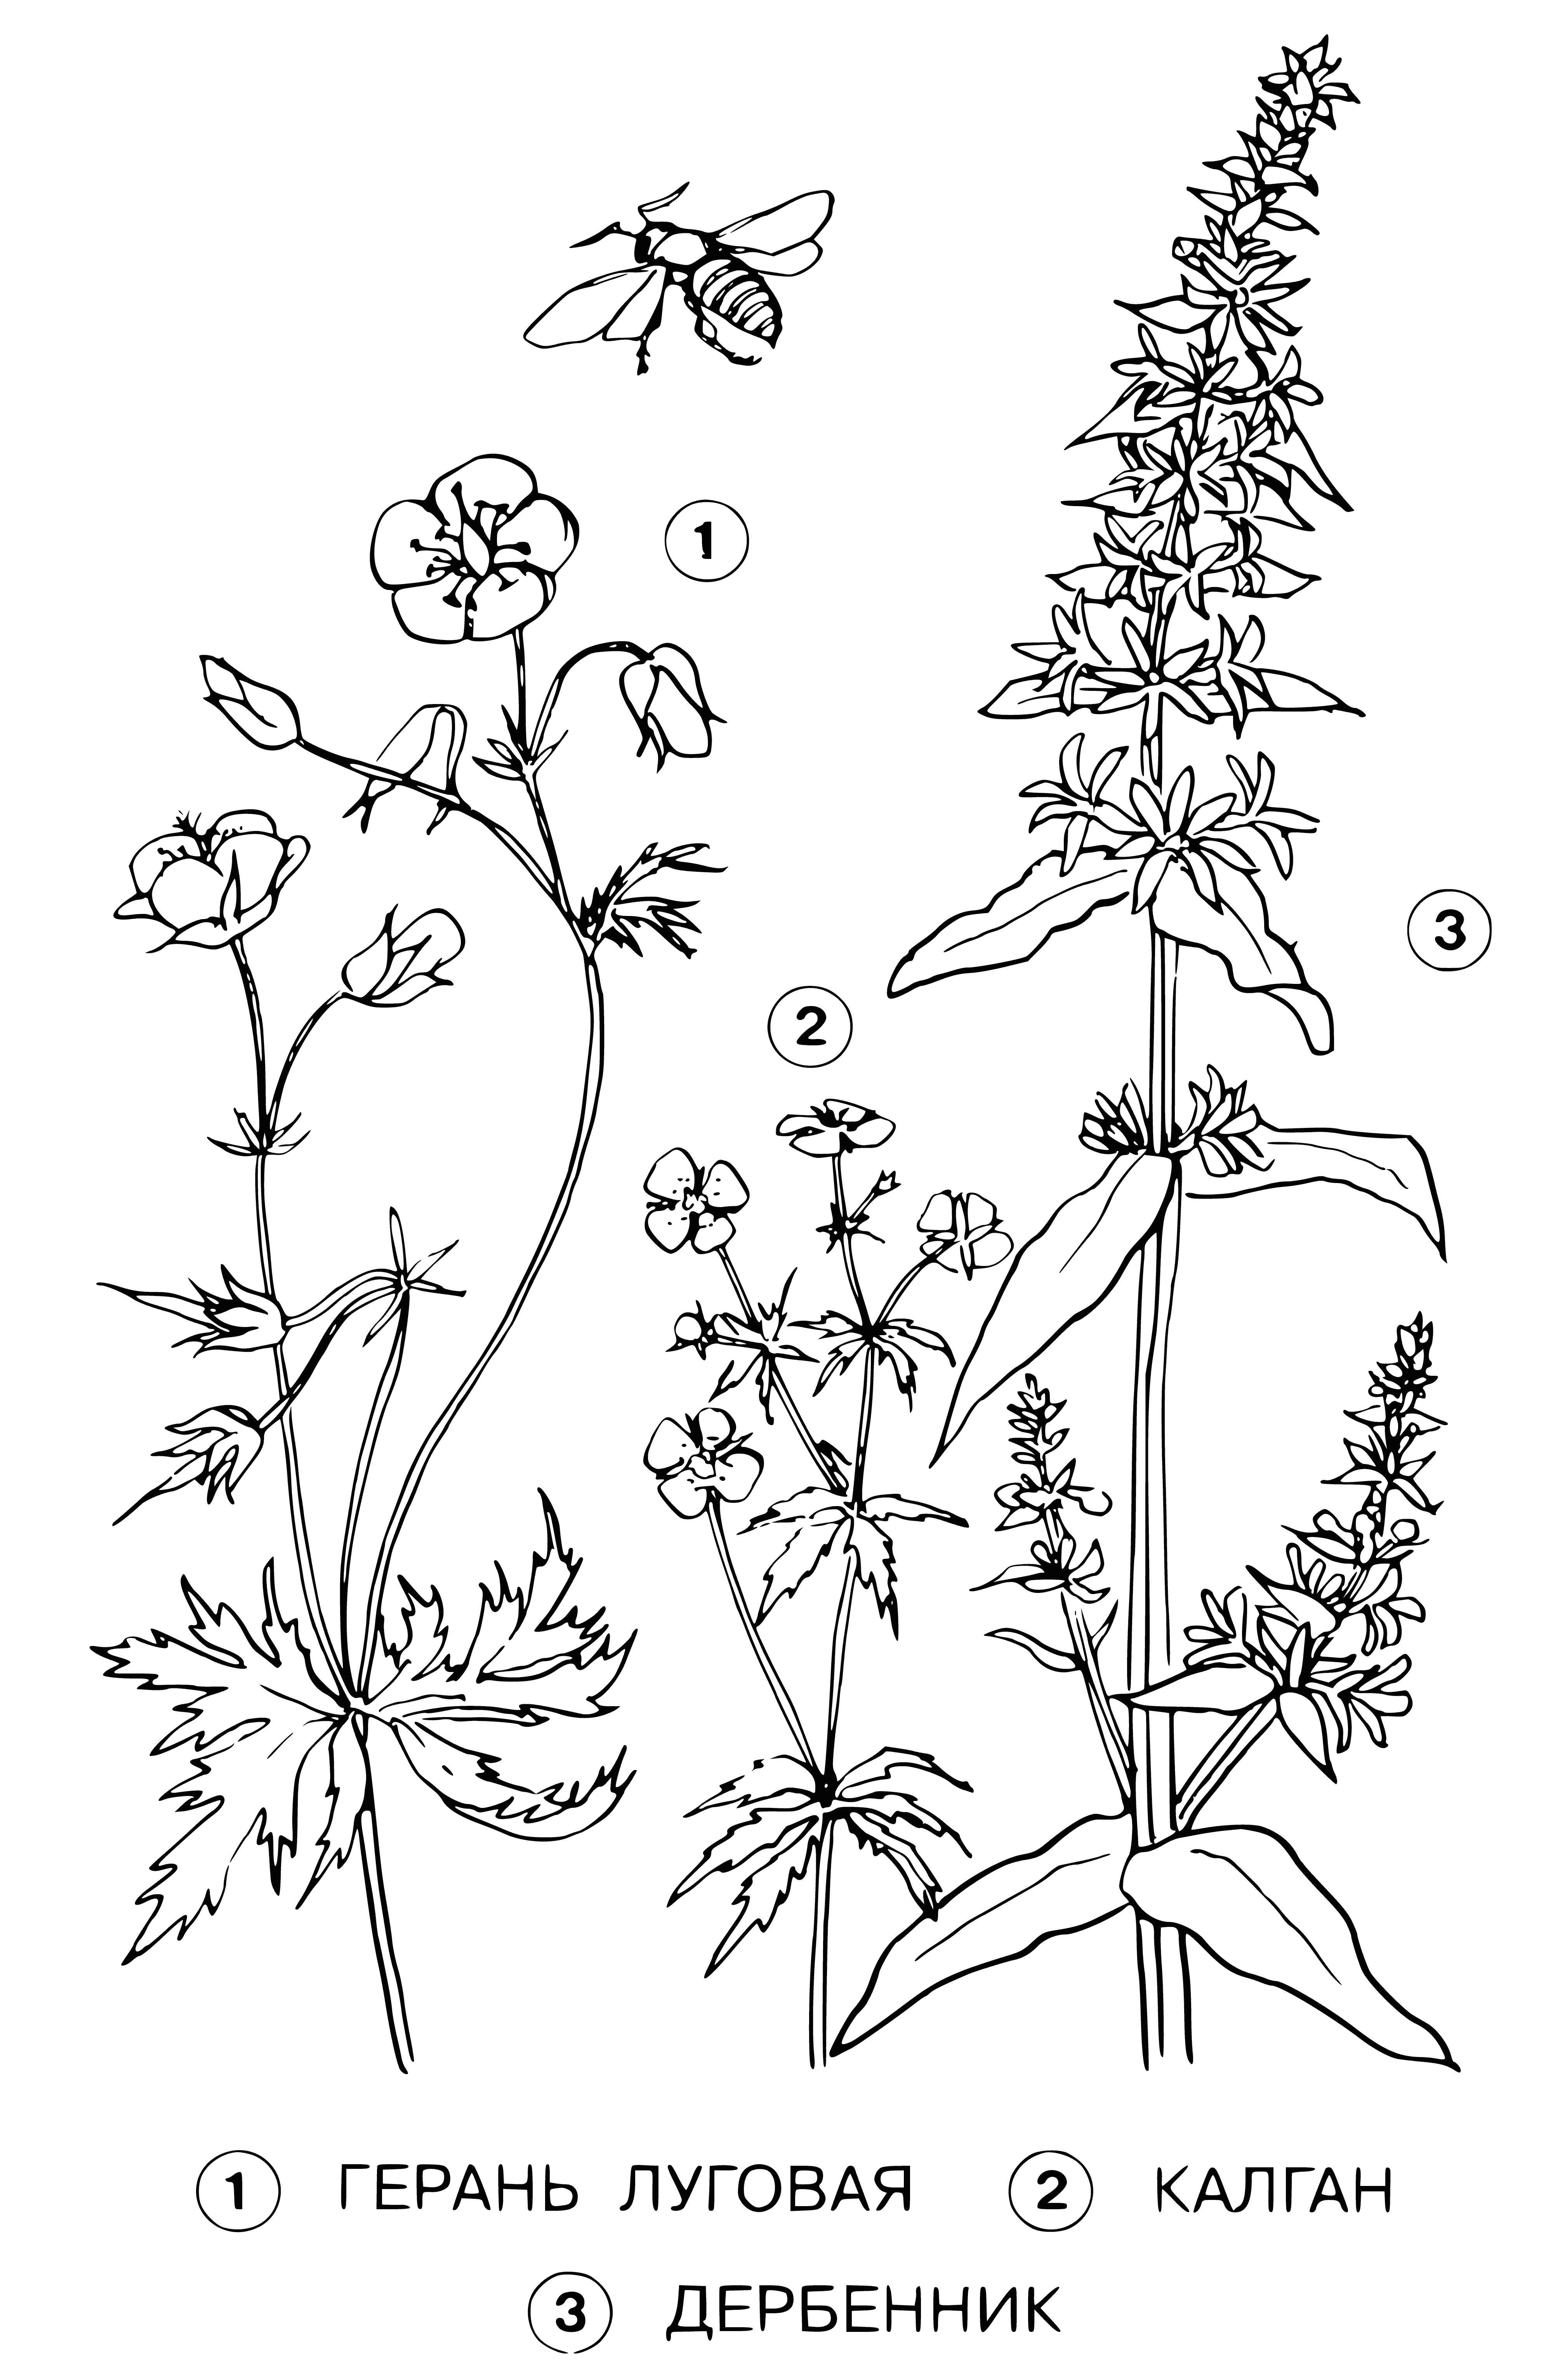 coloring page: In meadow: geraniums (large, bright flowers), kalgan (small yellow flower), derbennik (white w/ yellow center).